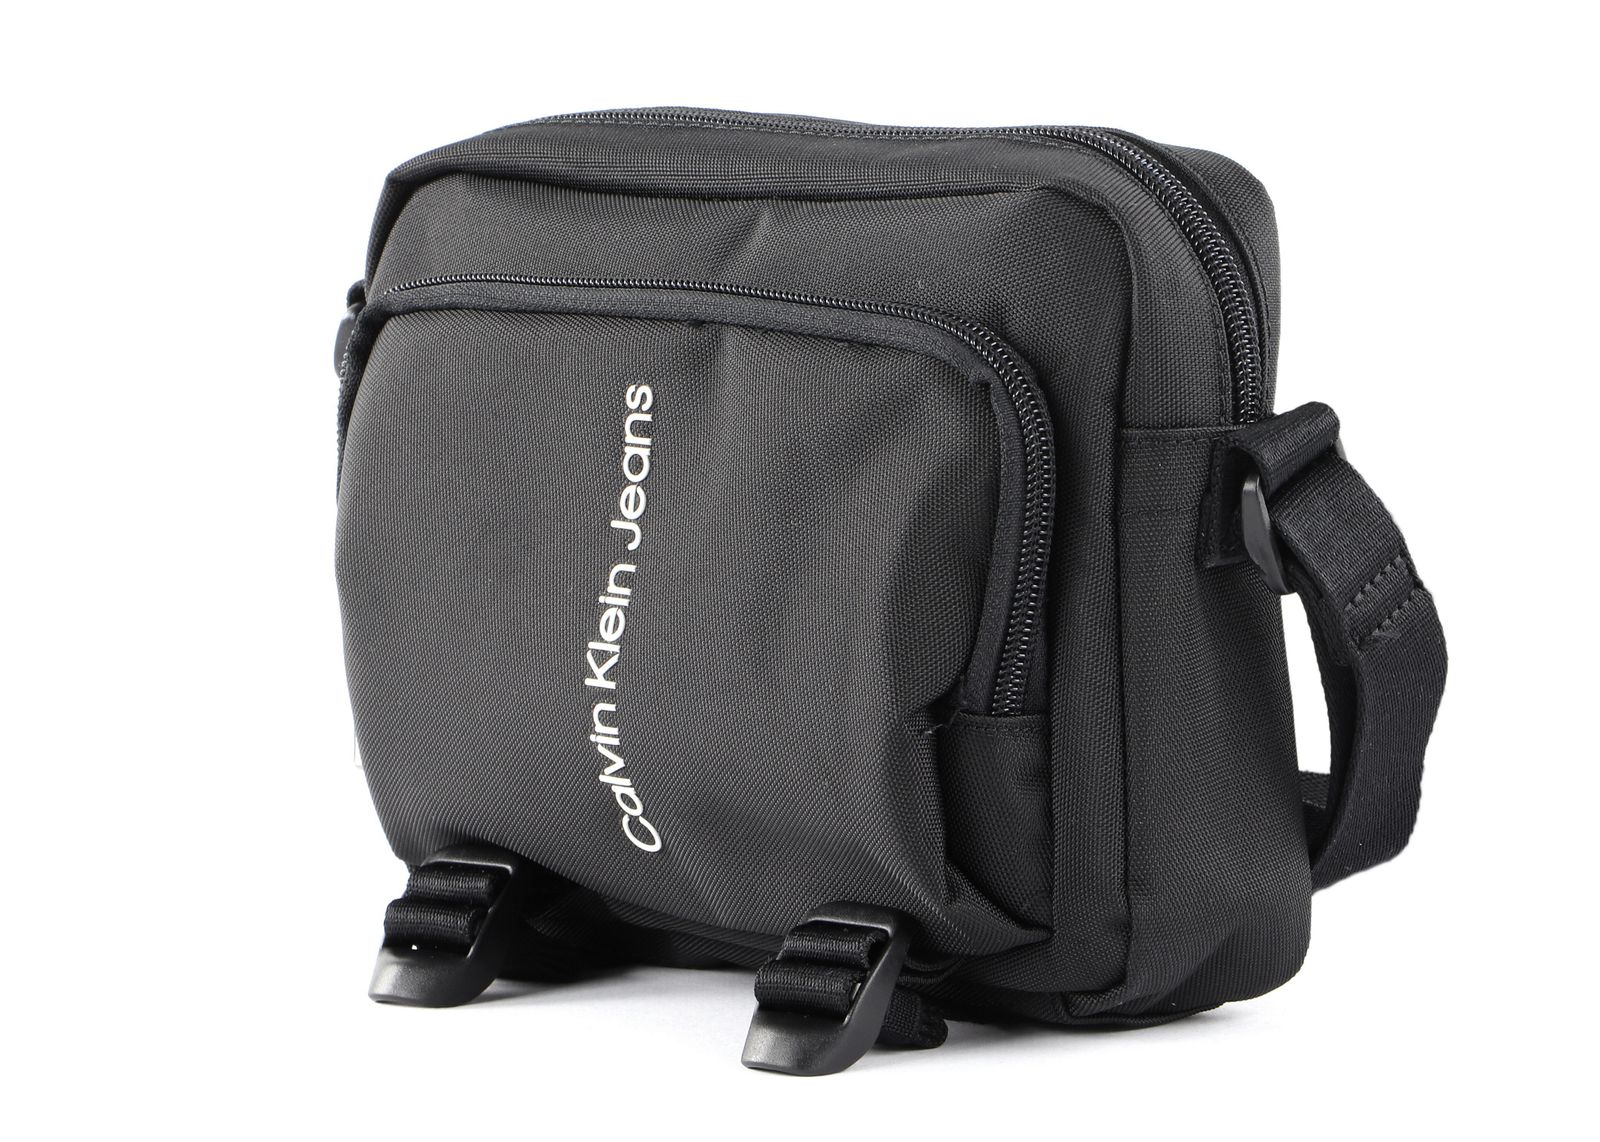 Calvin Klein Sport Camera INST | bags, purses accessories Black online Essentials & | Bag modeherz Buy